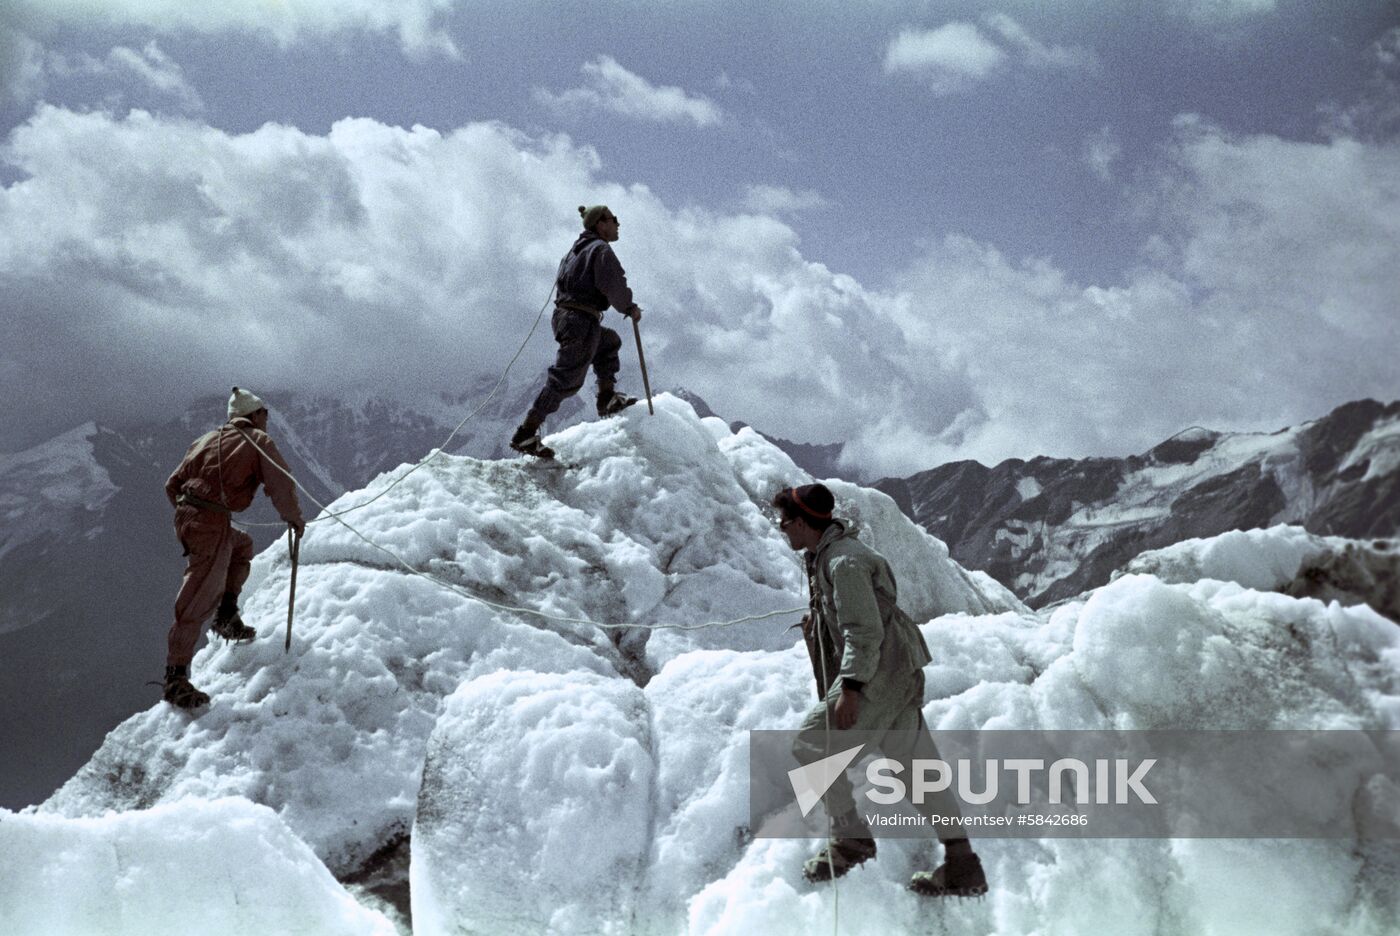 Soviet mountaineers in Pamir mountains